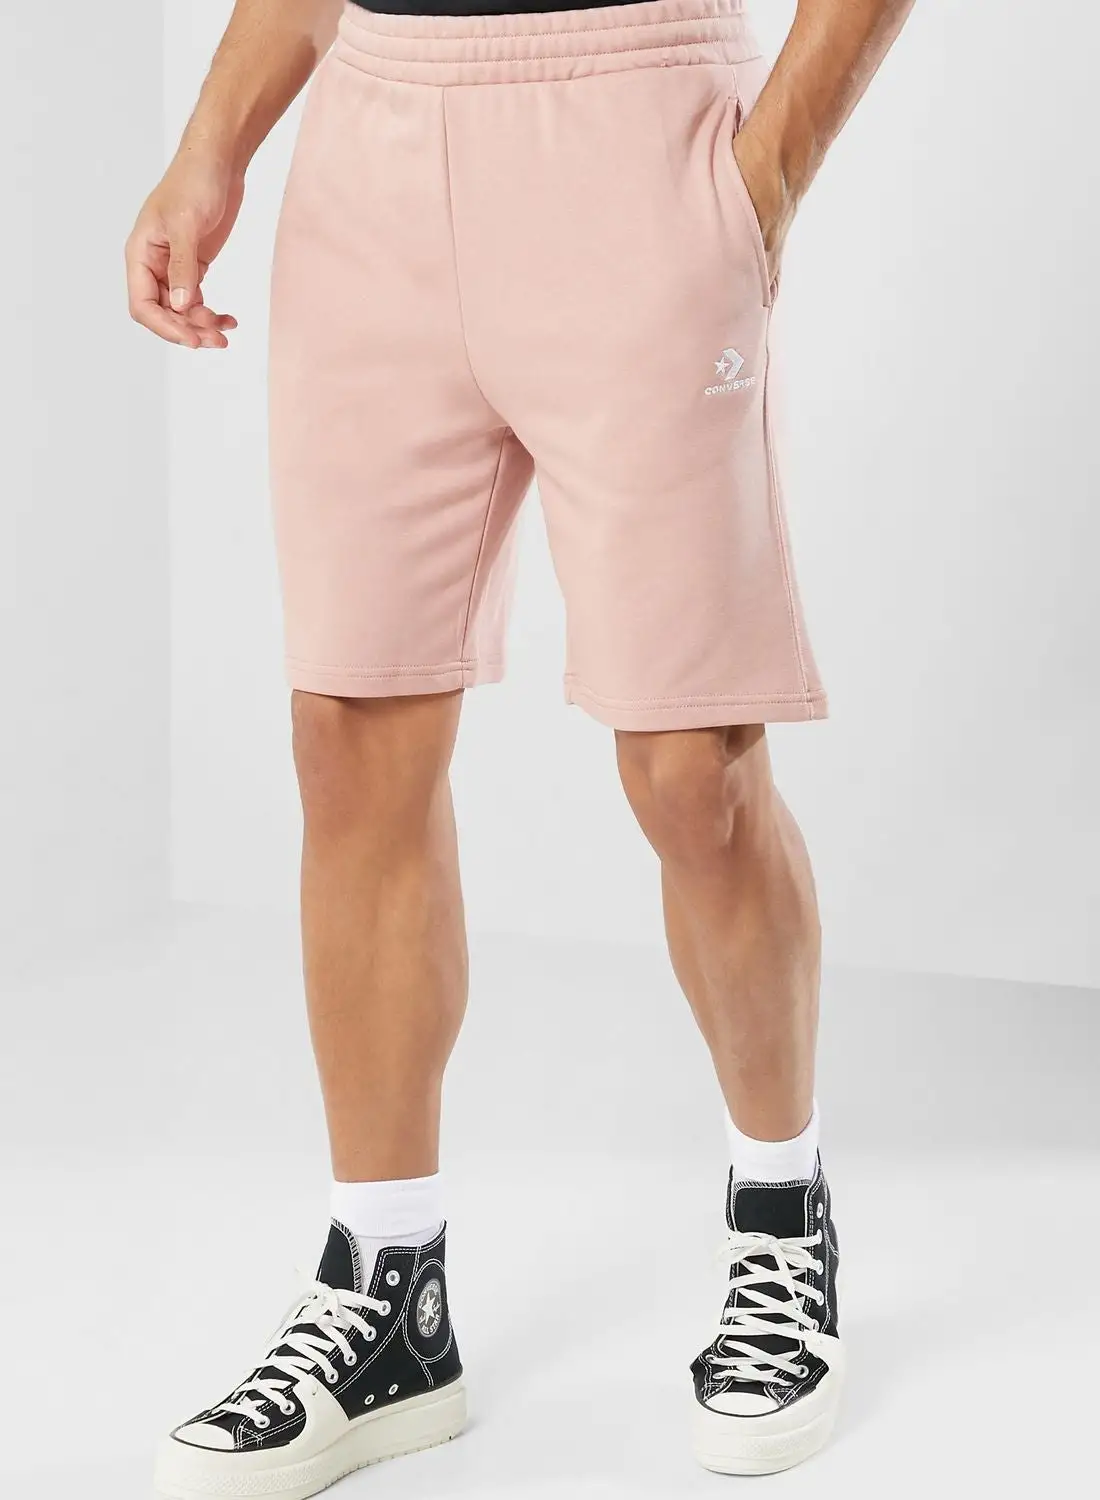 CONVERSE Classic Fit Wearers Shorts